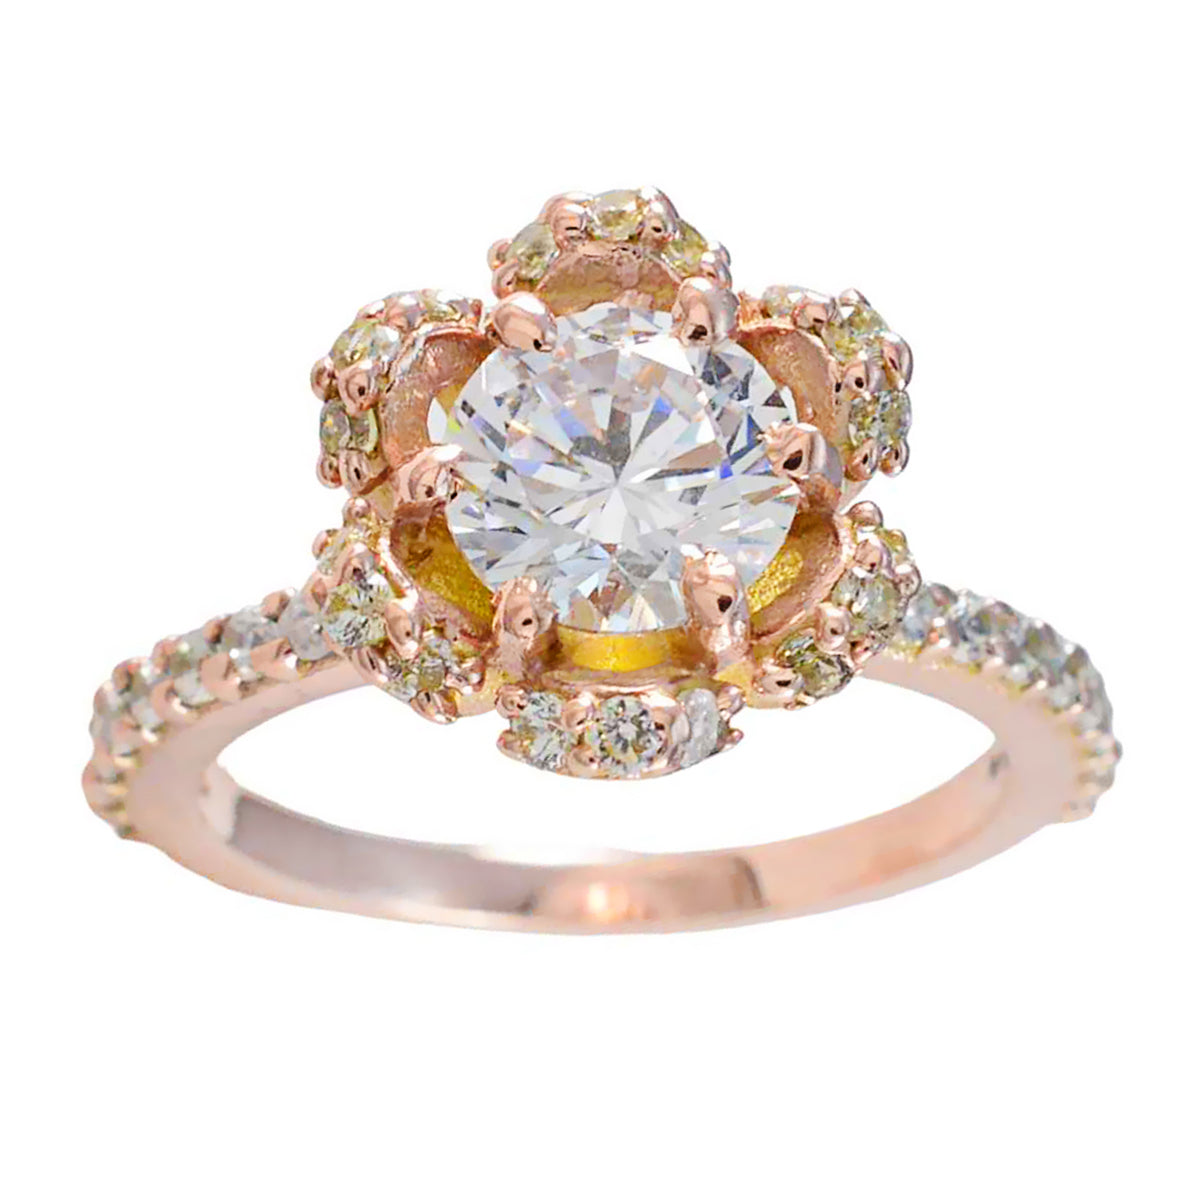 Riyo Beautiful Silver Ring With Rose Gold Plating White CZ Stone Round Shape Prong Setting Fashion Jewelry Wedding Ring